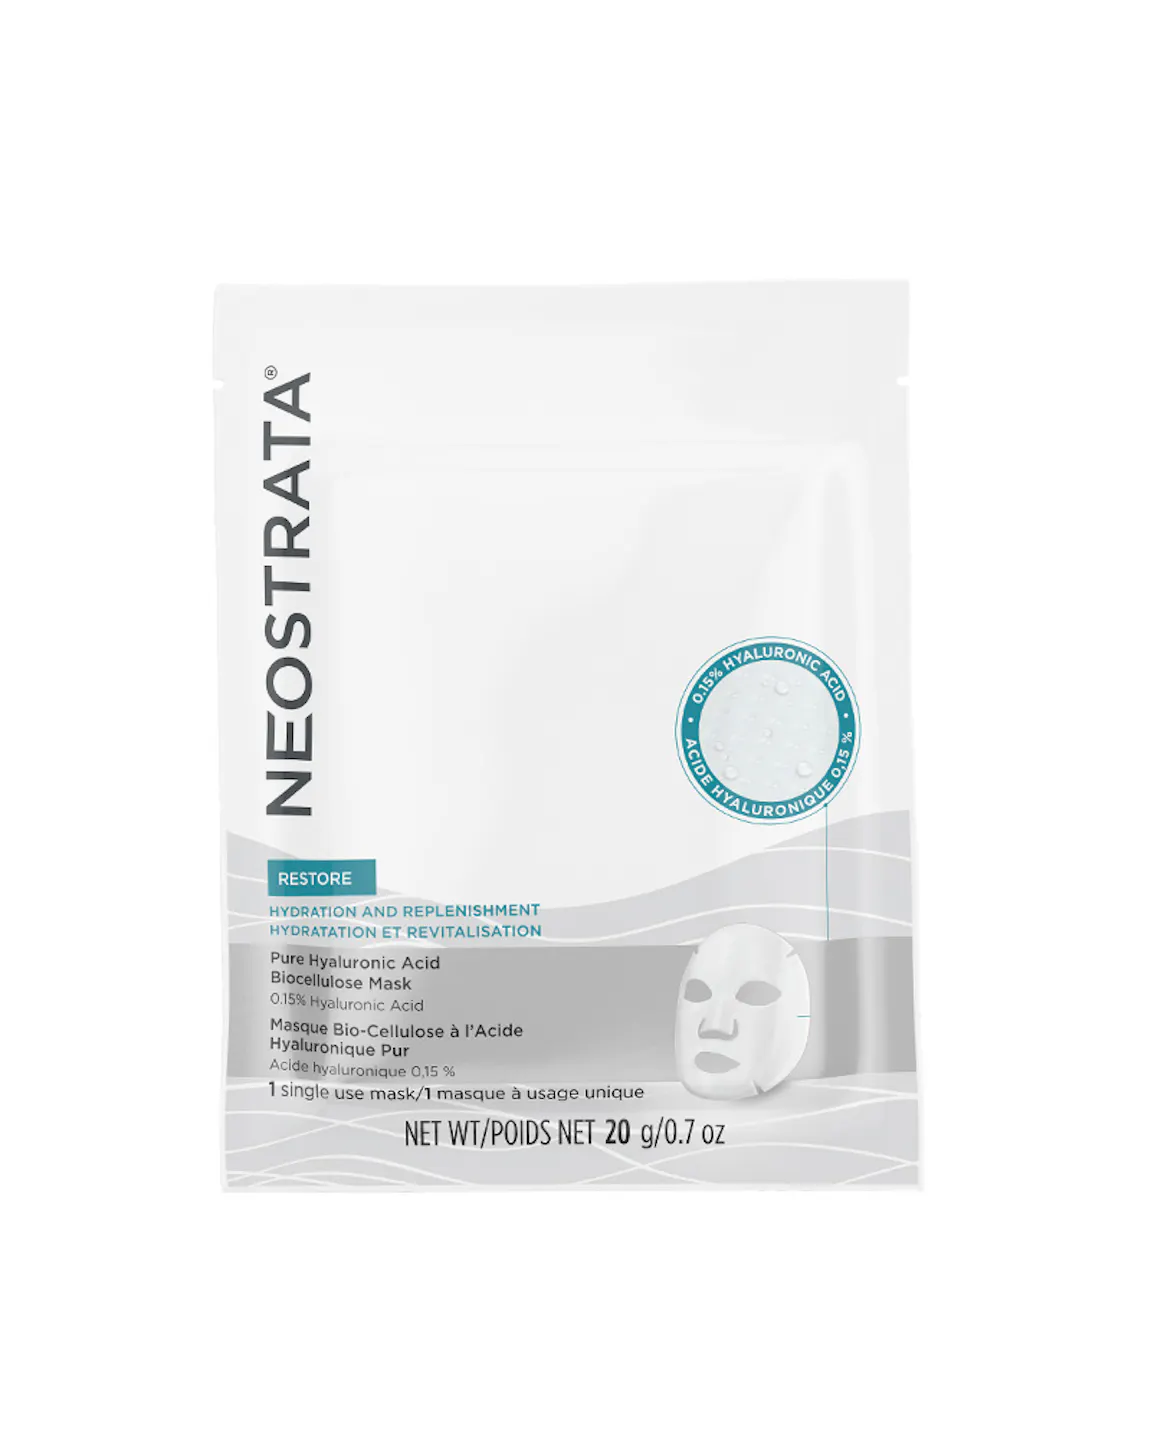 NeoStrata Restore Pure Hyaluronic Acid Biocellulose Mask – 6 Pack